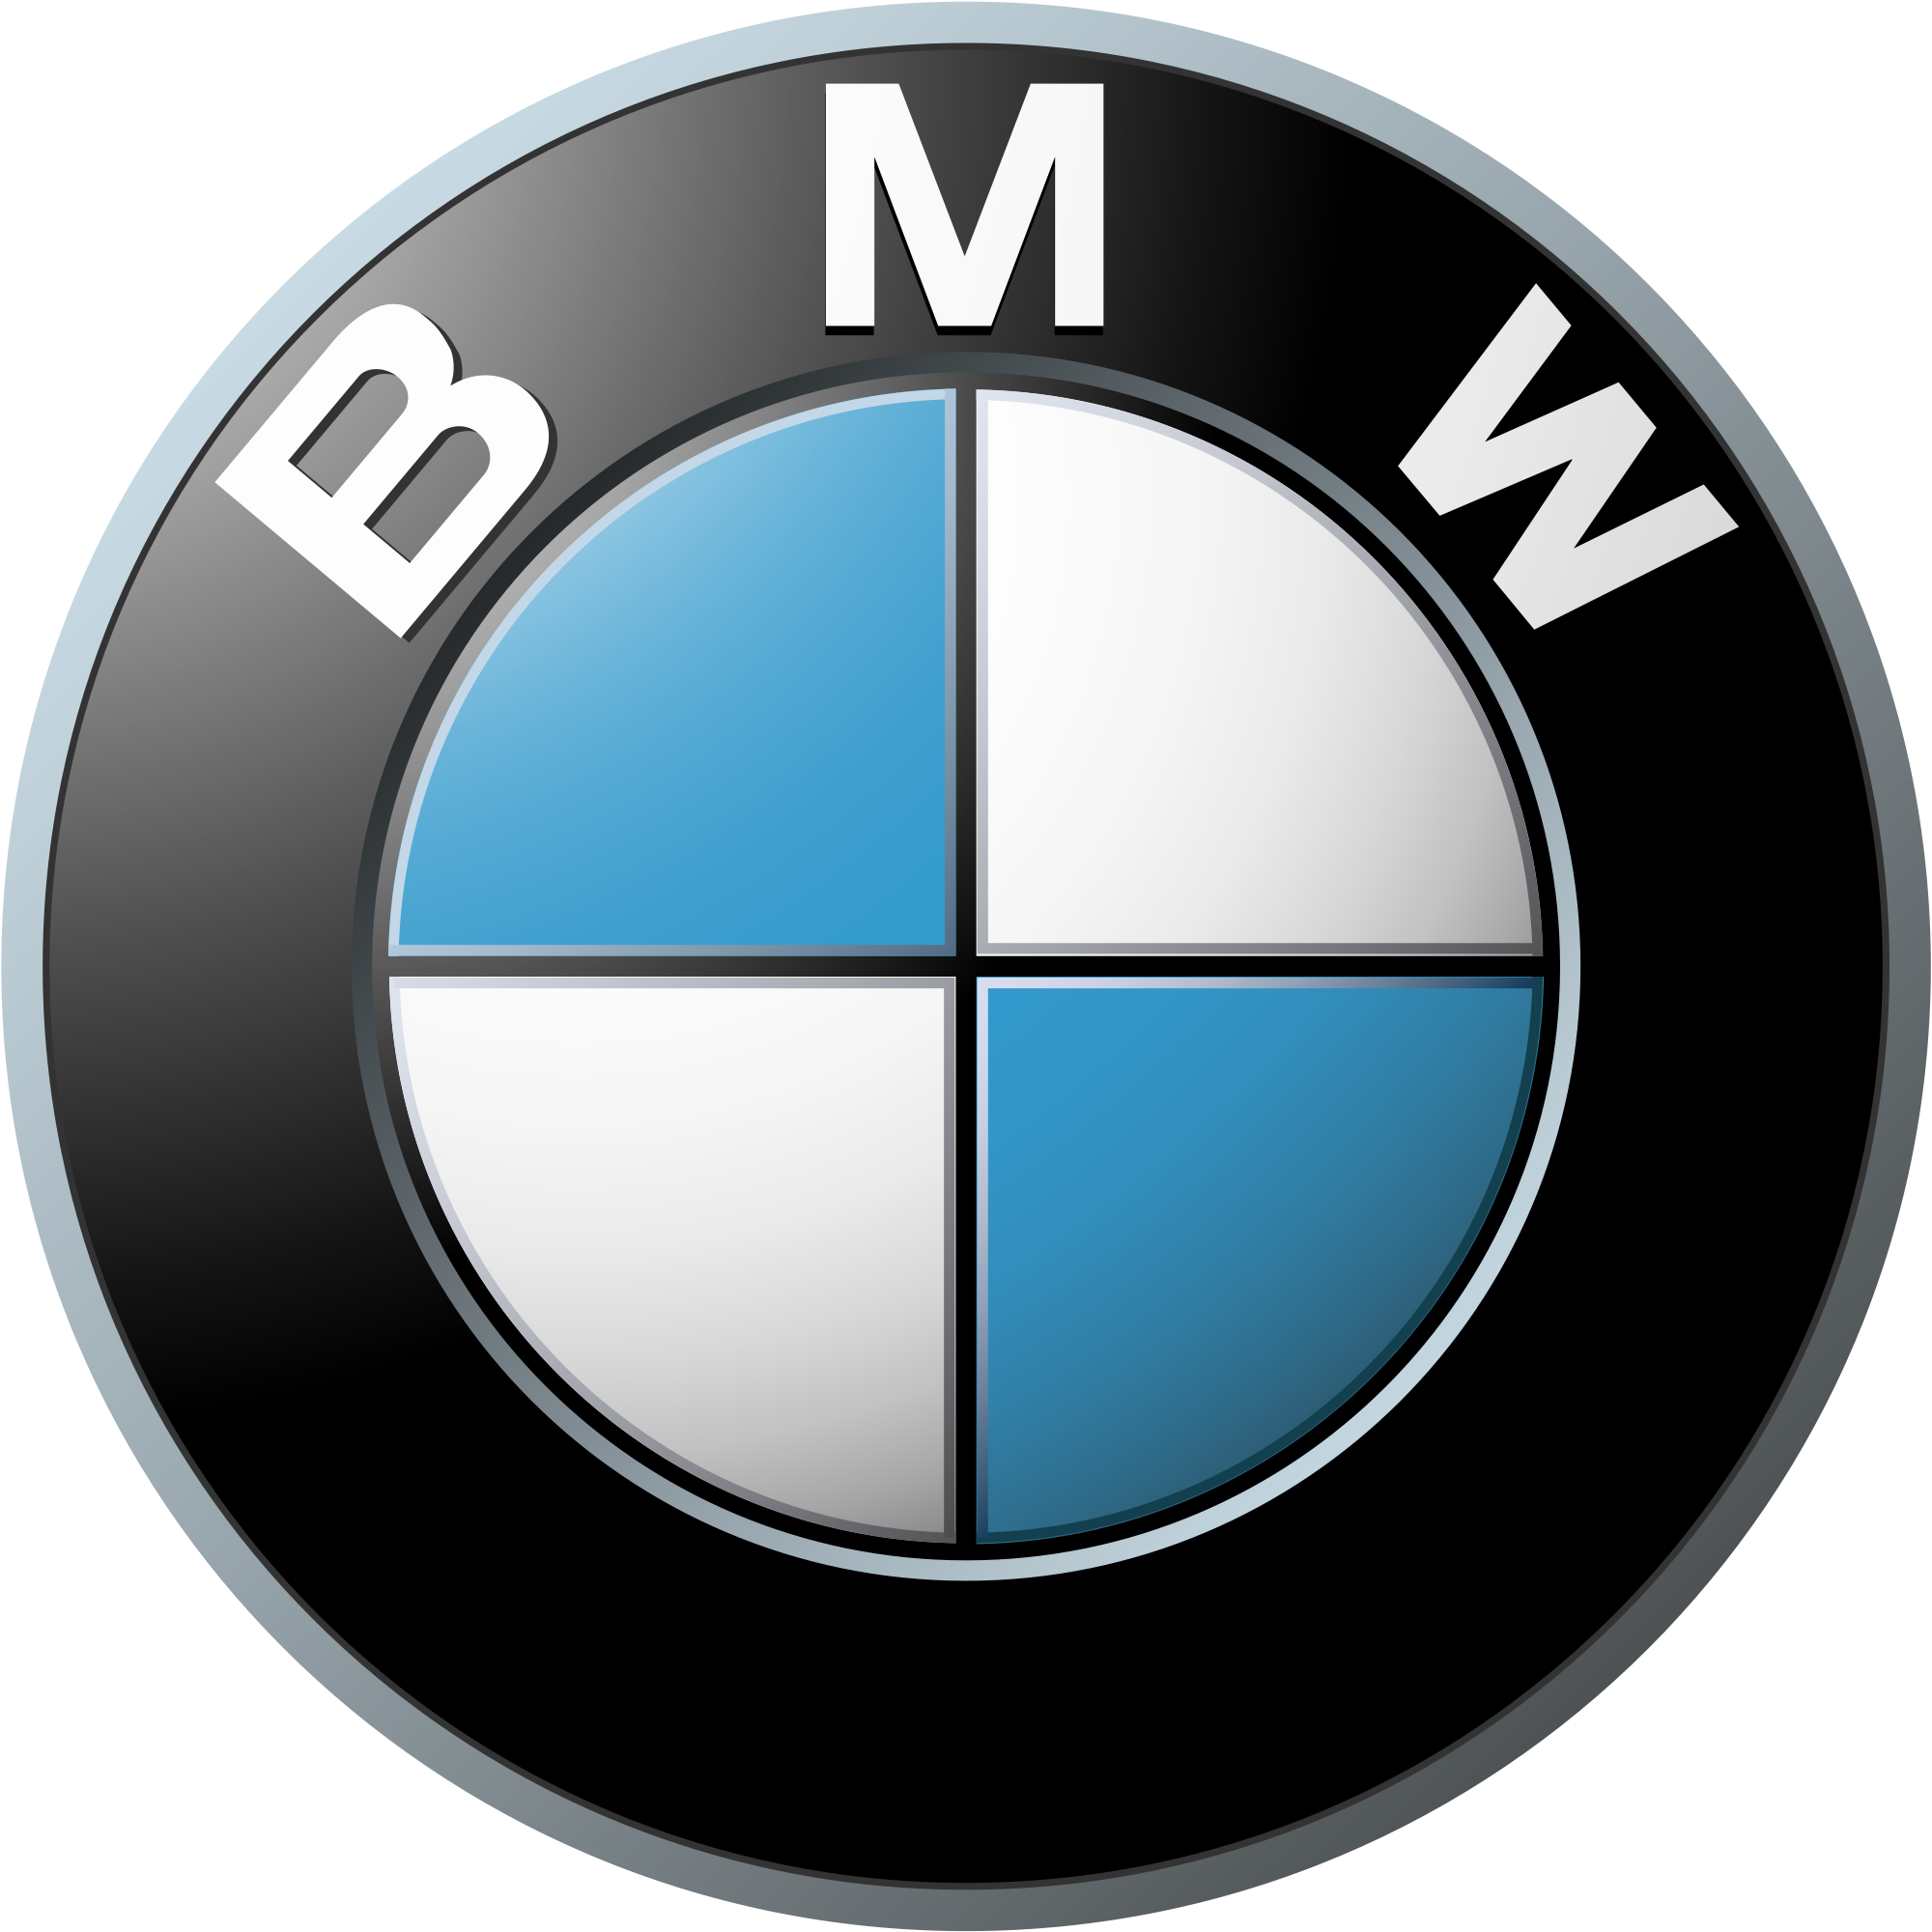 BMW Logo PNG images Free Download